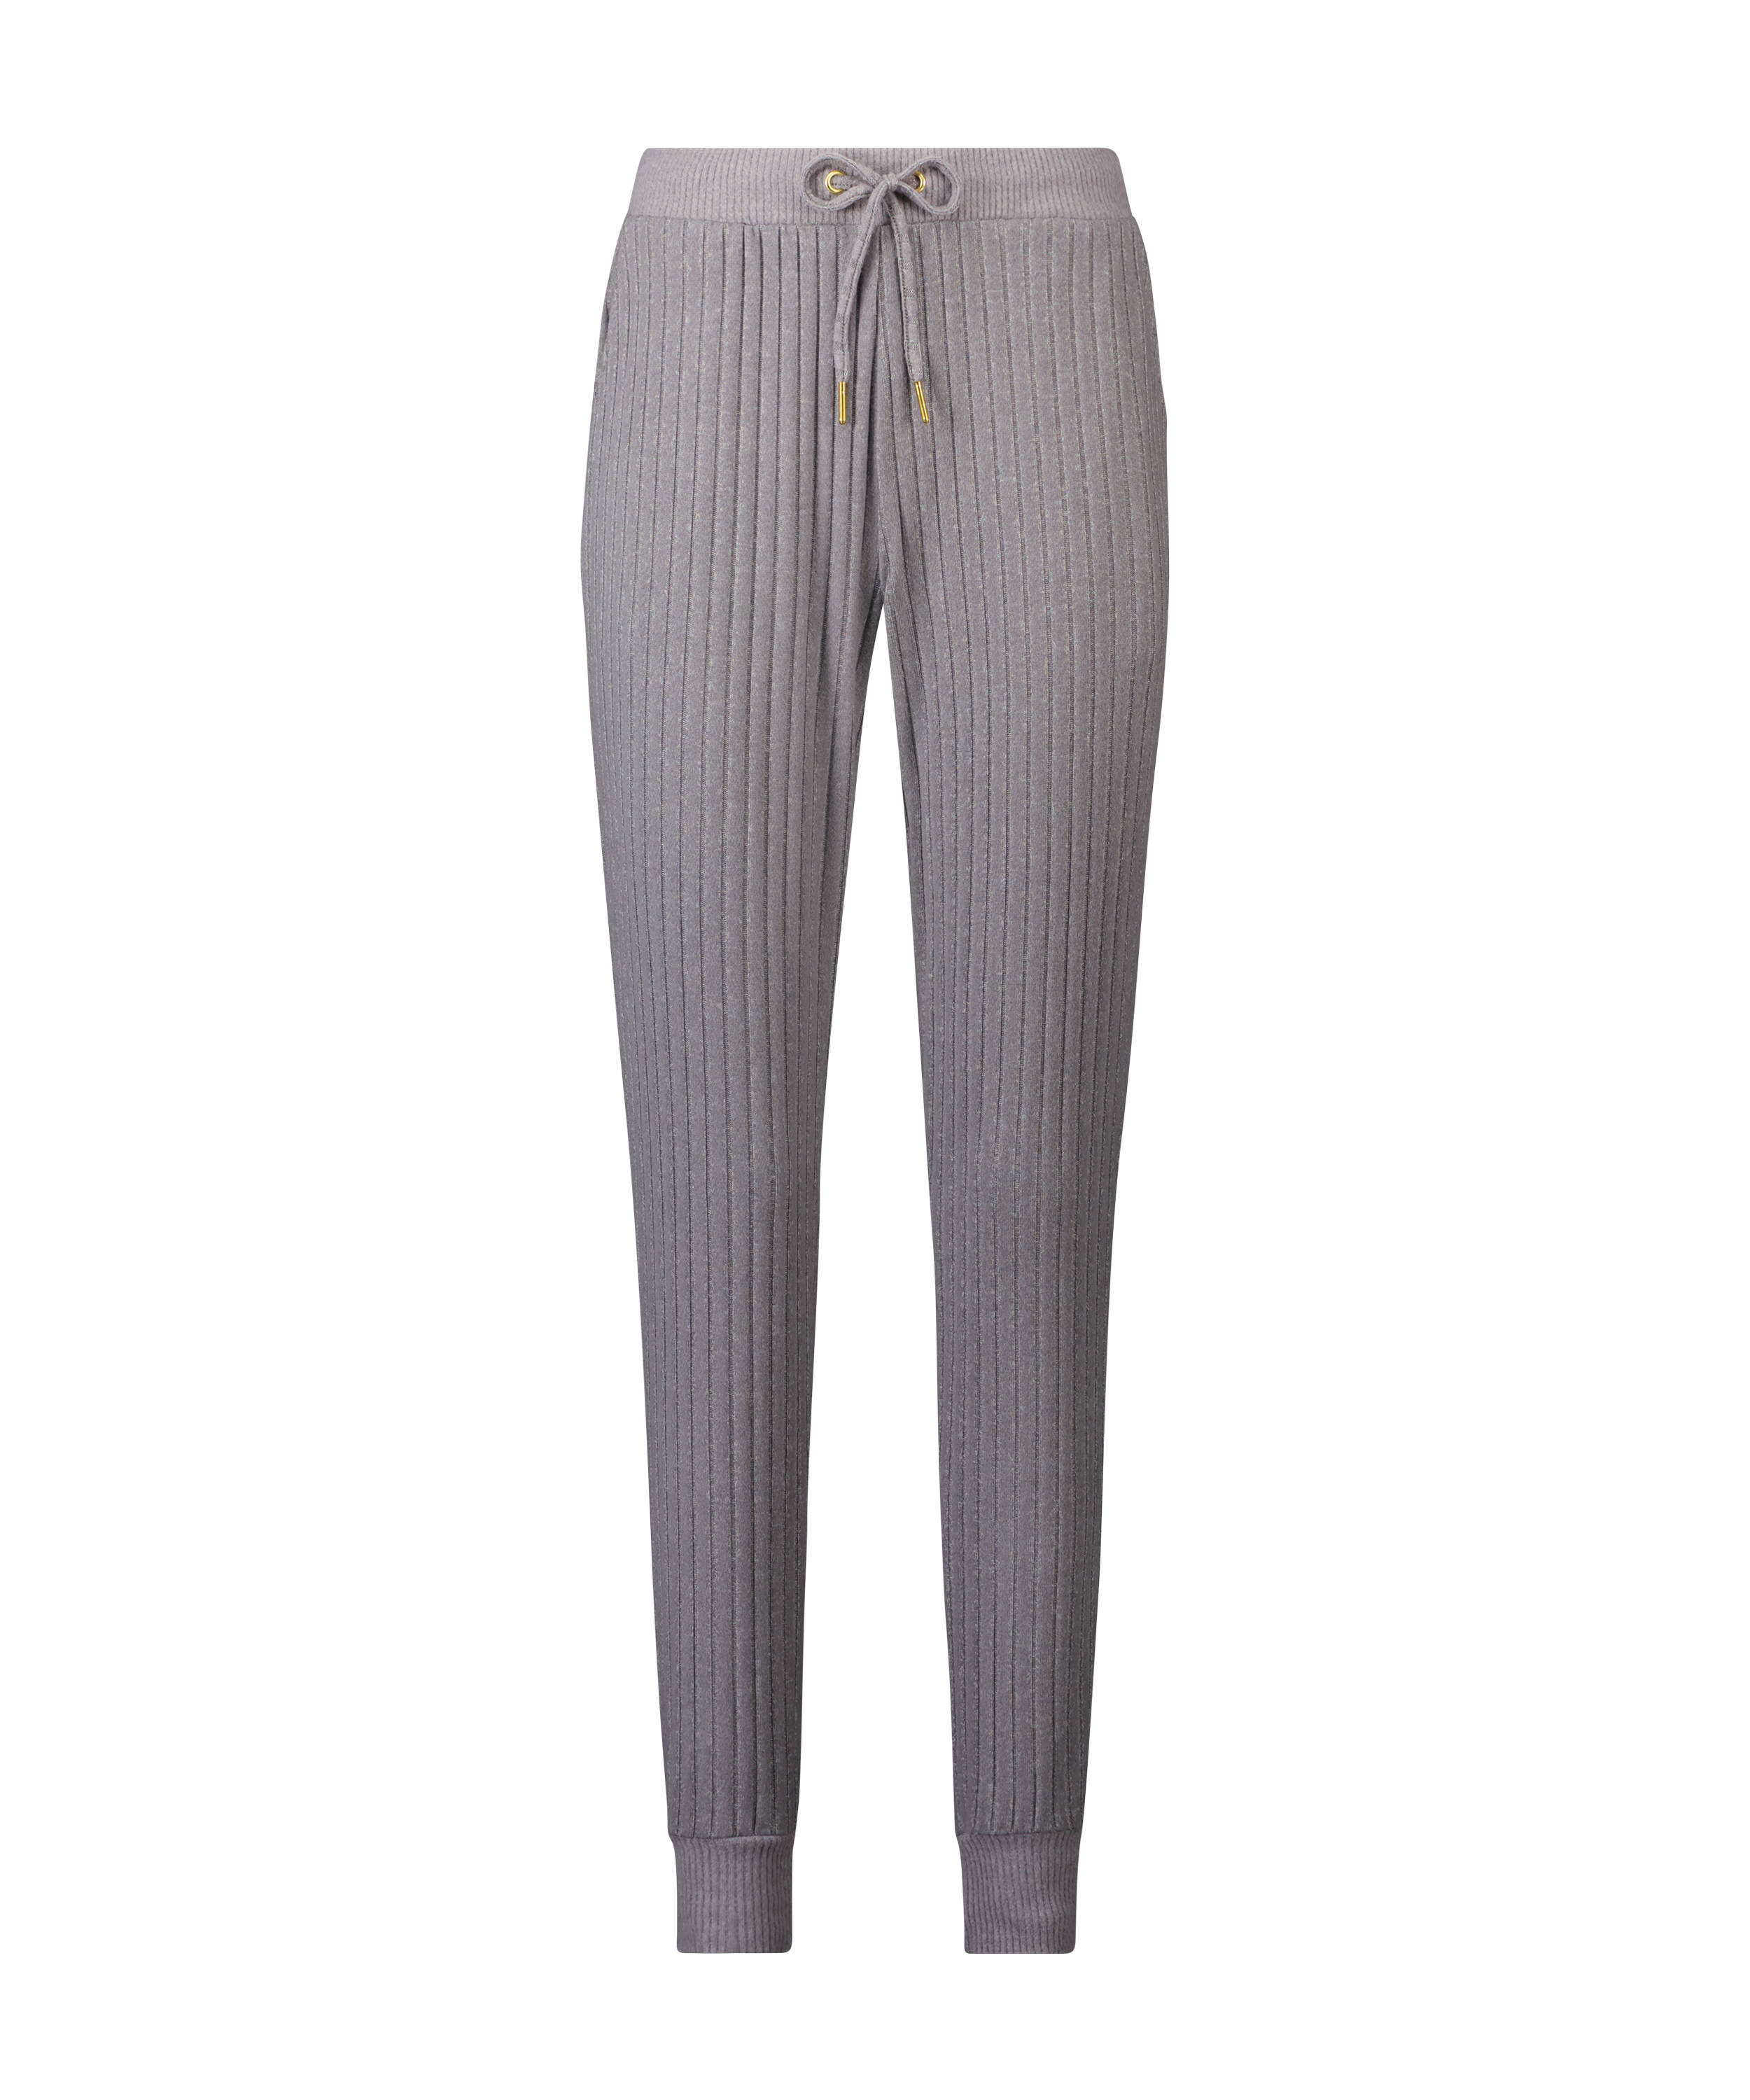 Petite Brushed Rib Pyjama Pants, Grey, main